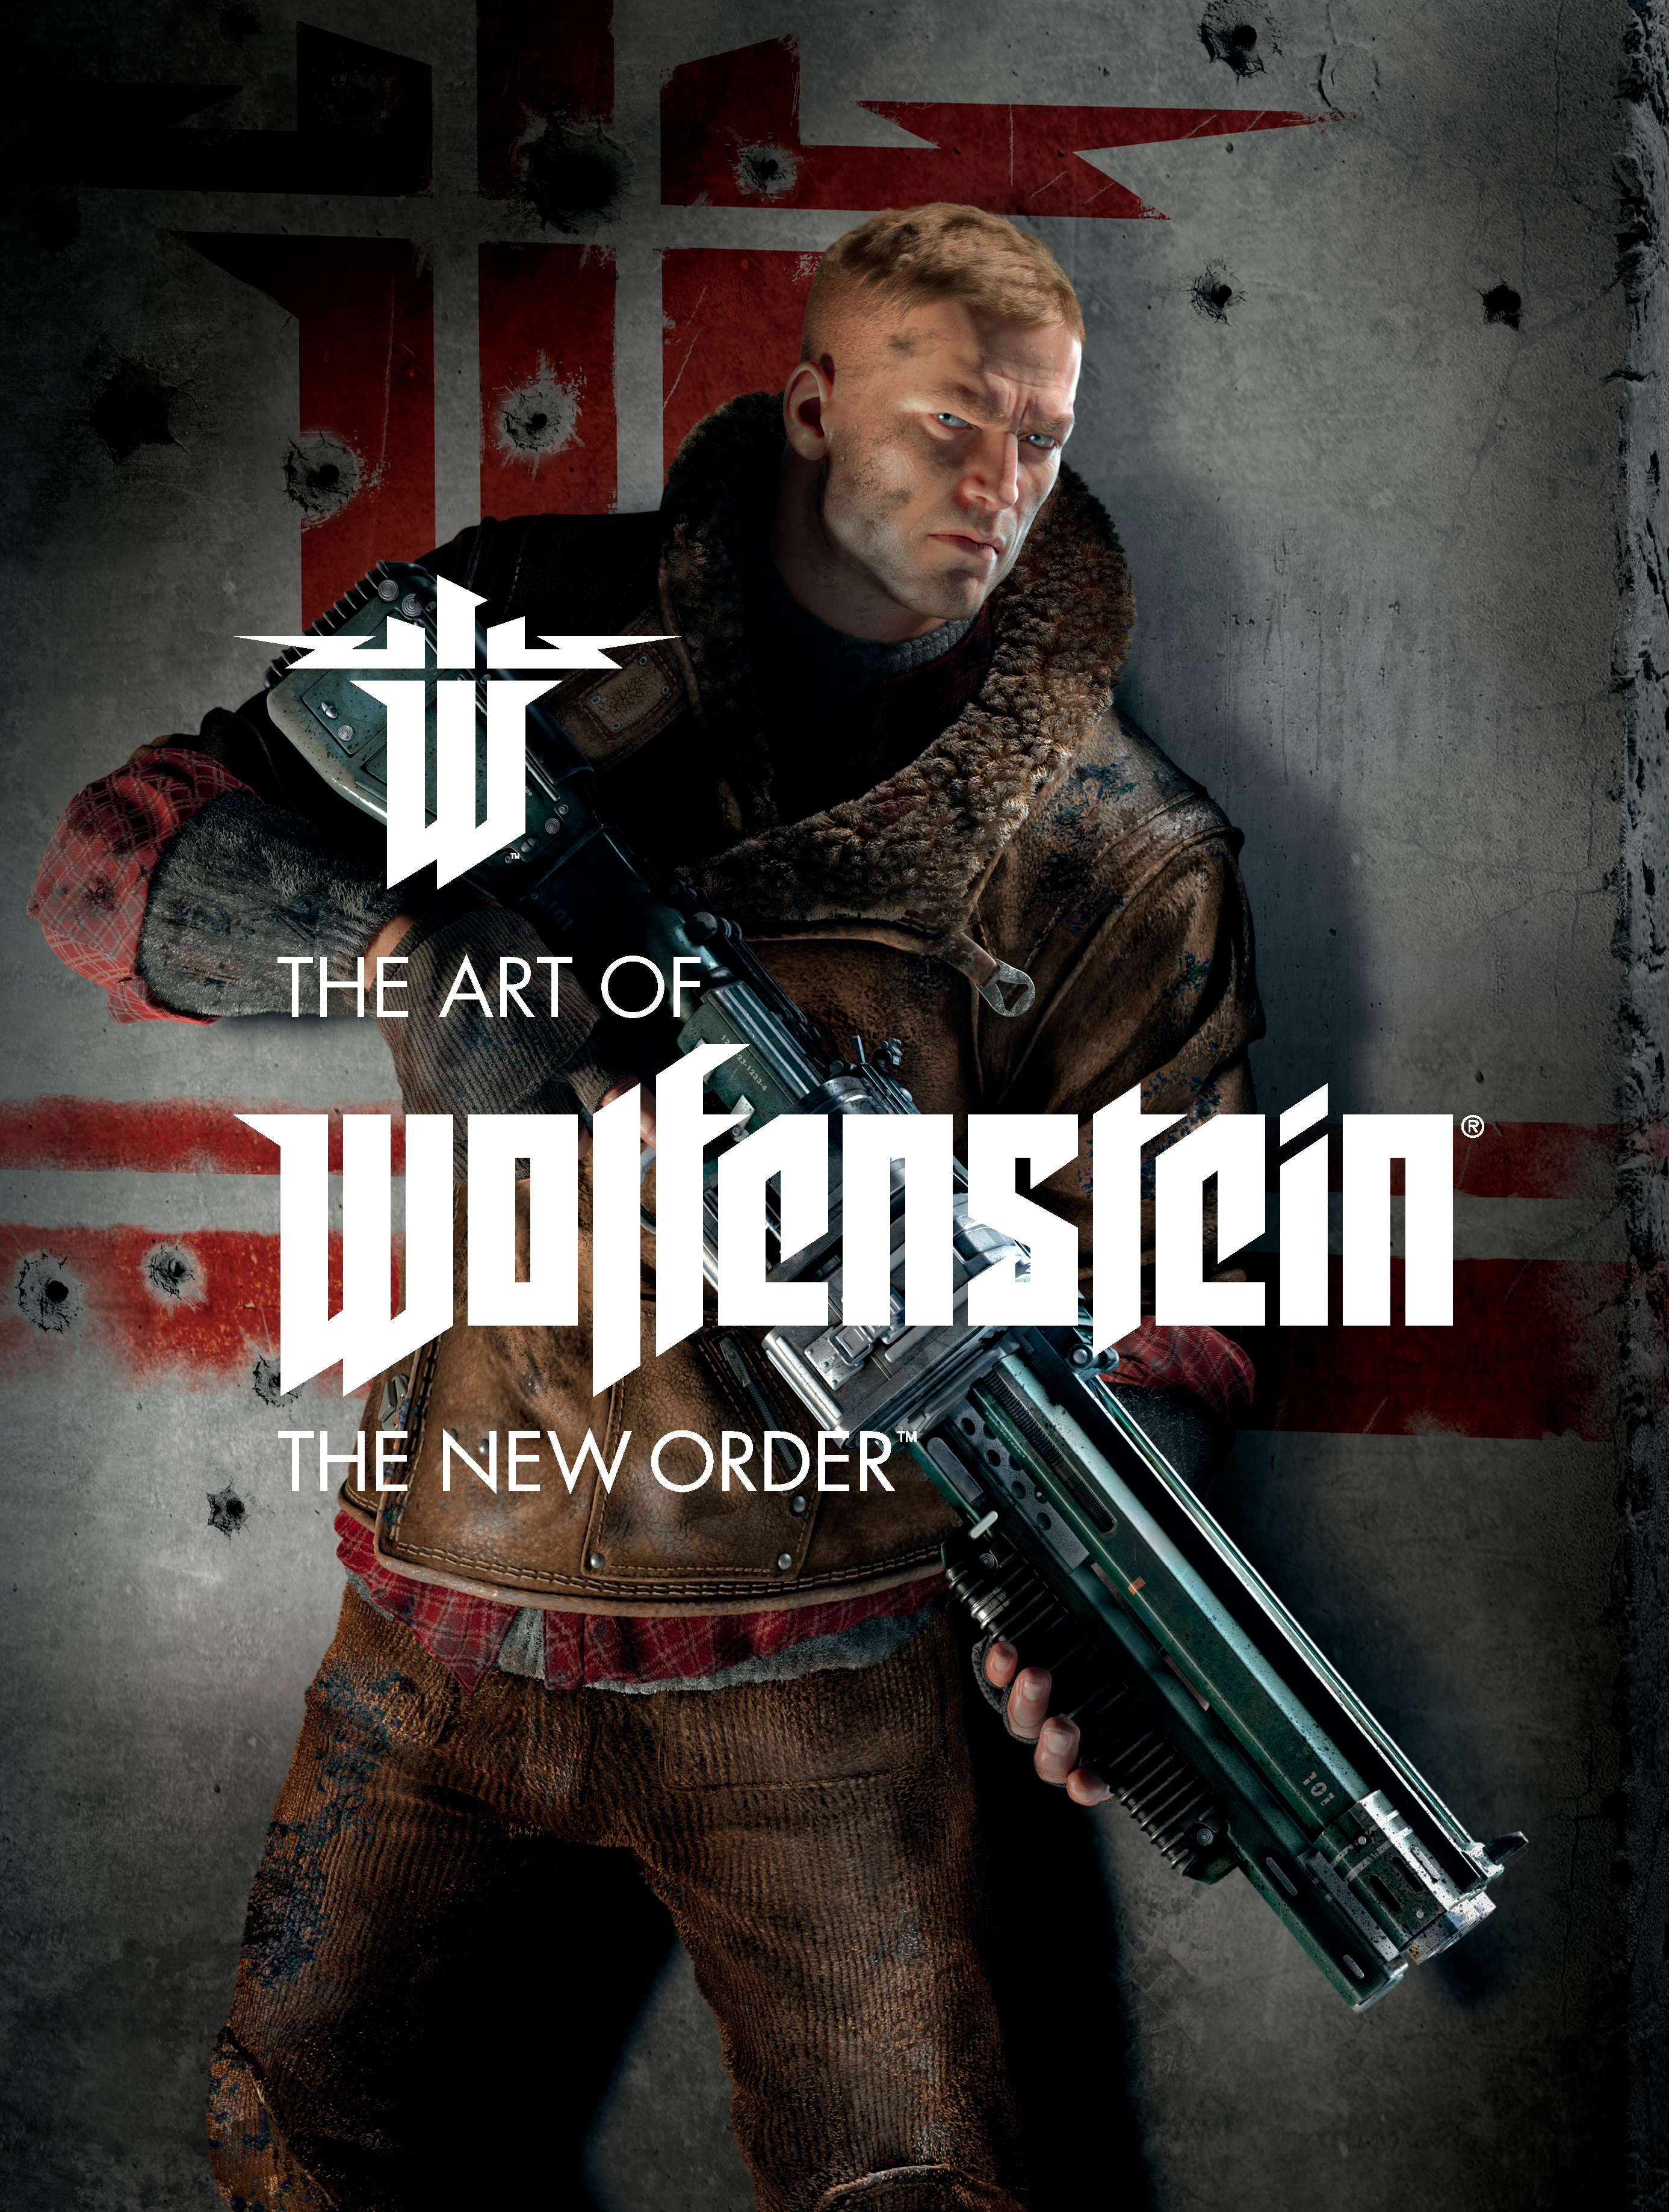 Wolfenstein: The New Order - Game Overview